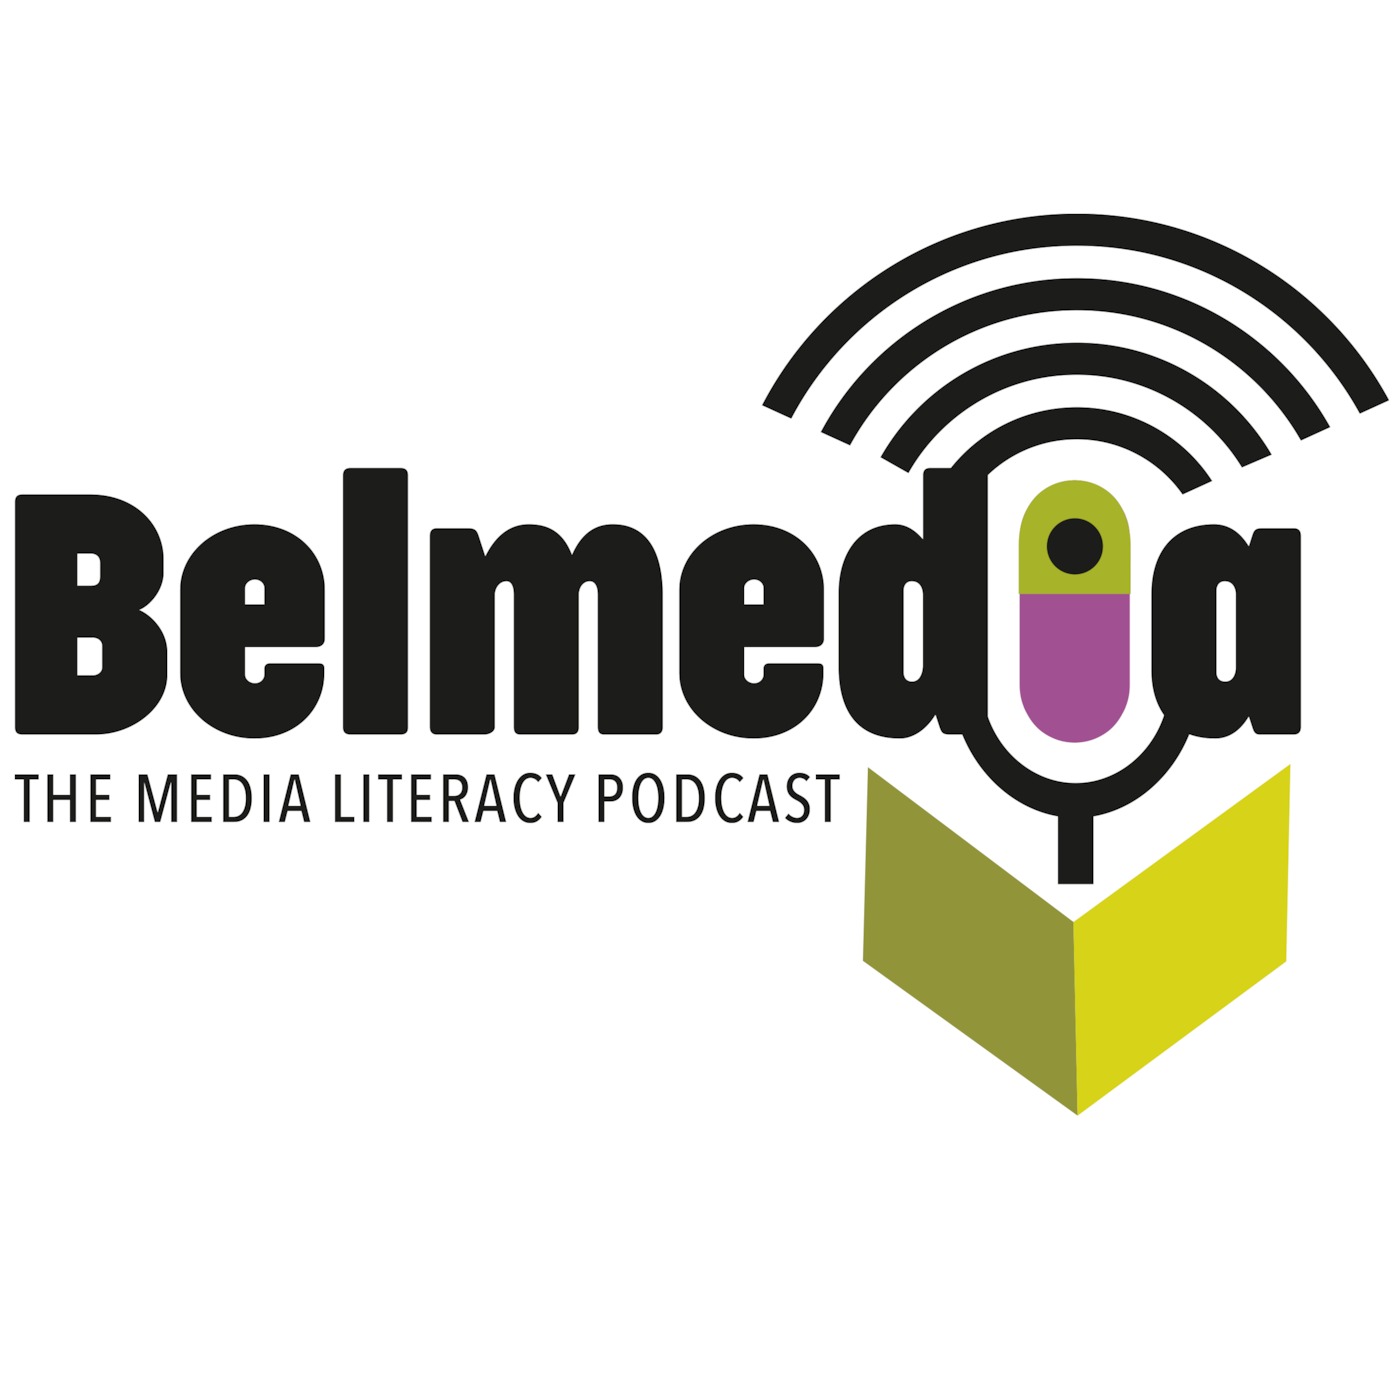 The Belmedia Podcast!